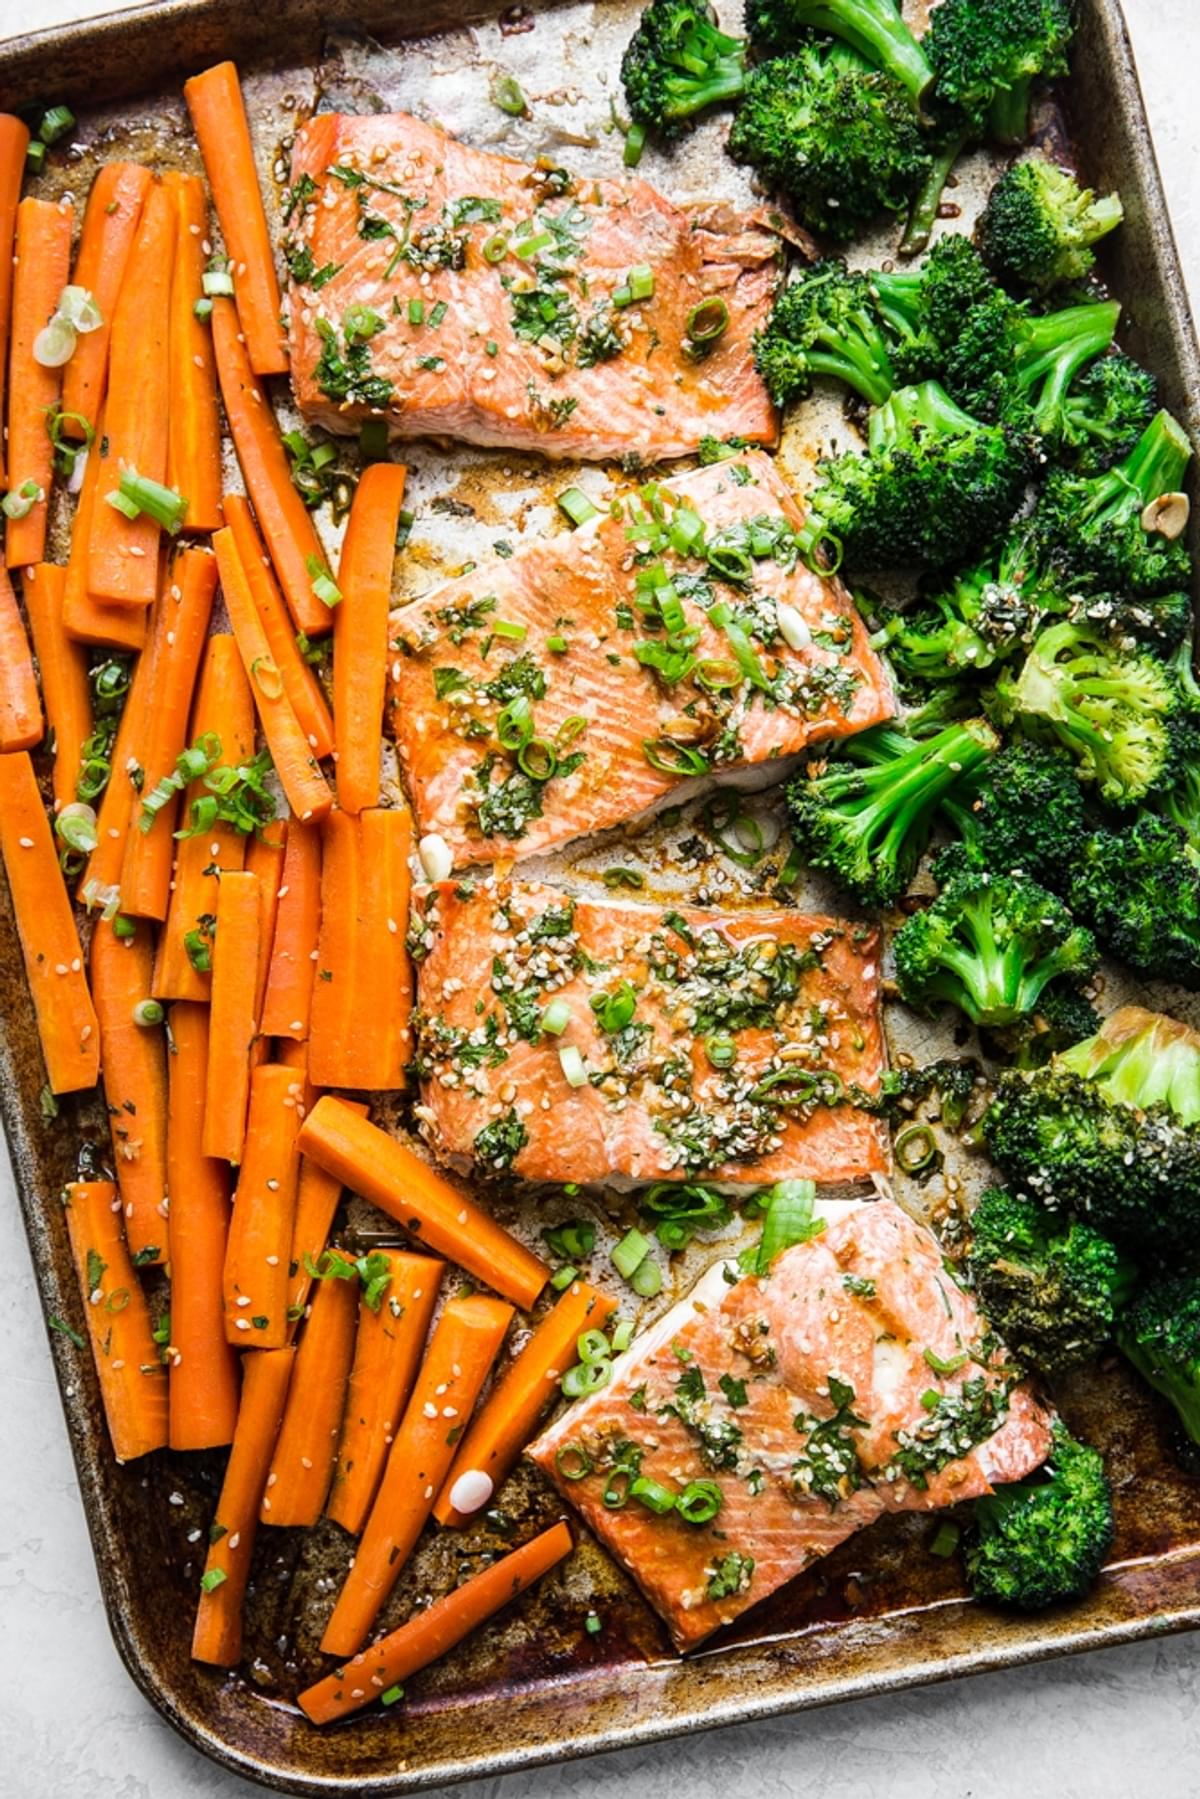 Baking sheet with carrots, salmon and broccoli with a teriyaki sauce